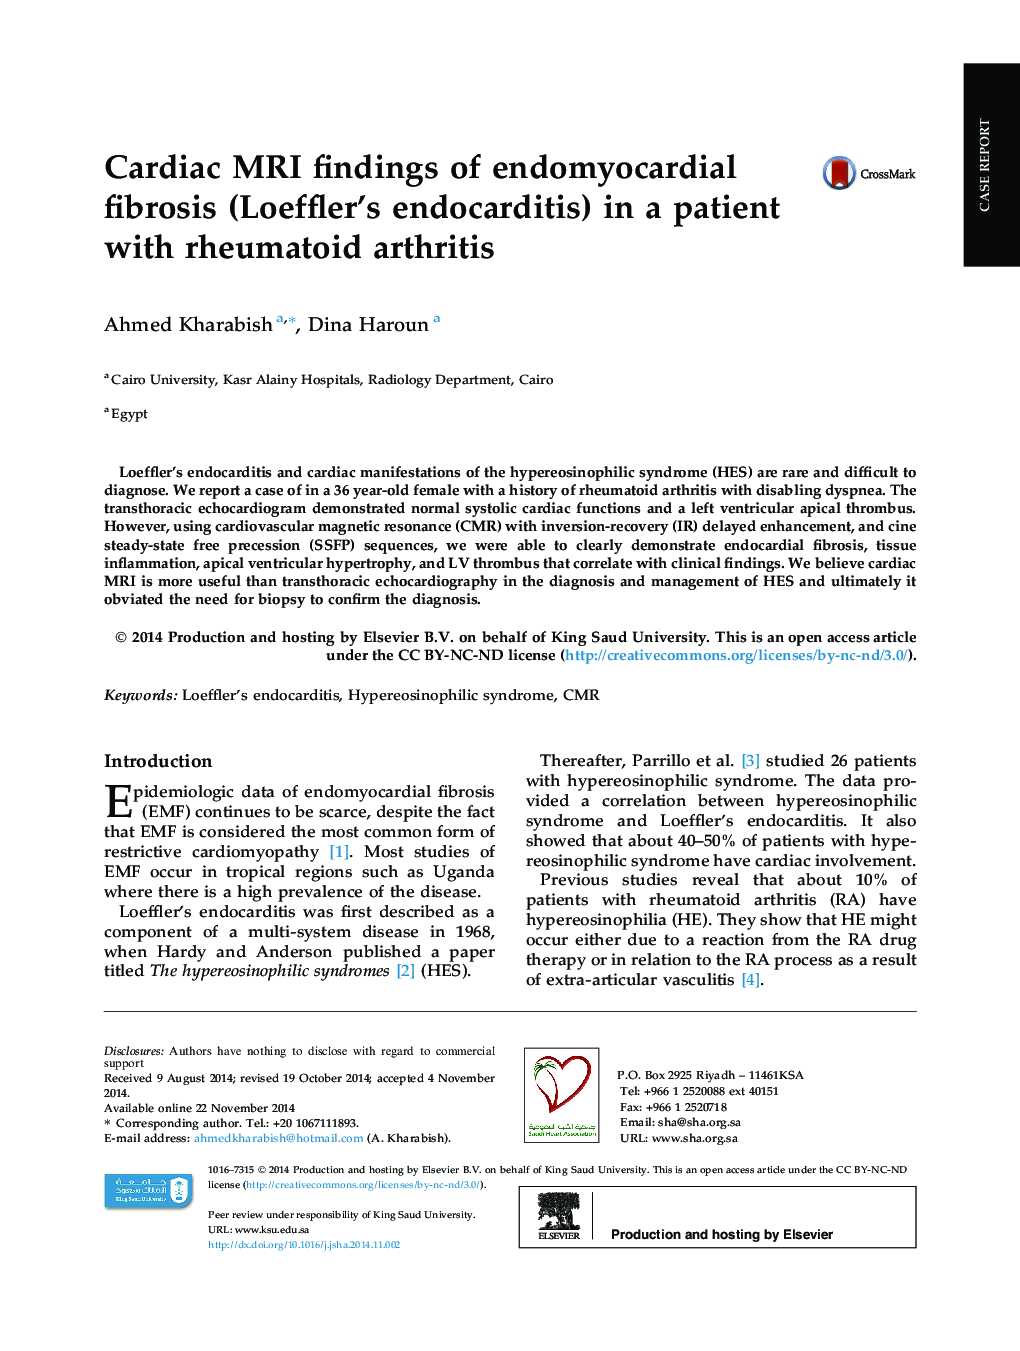 Cardiac MRI findings of endomyocardial fibrosis (Loeffler’s endocarditis) in a patient with rheumatoid arthritis 